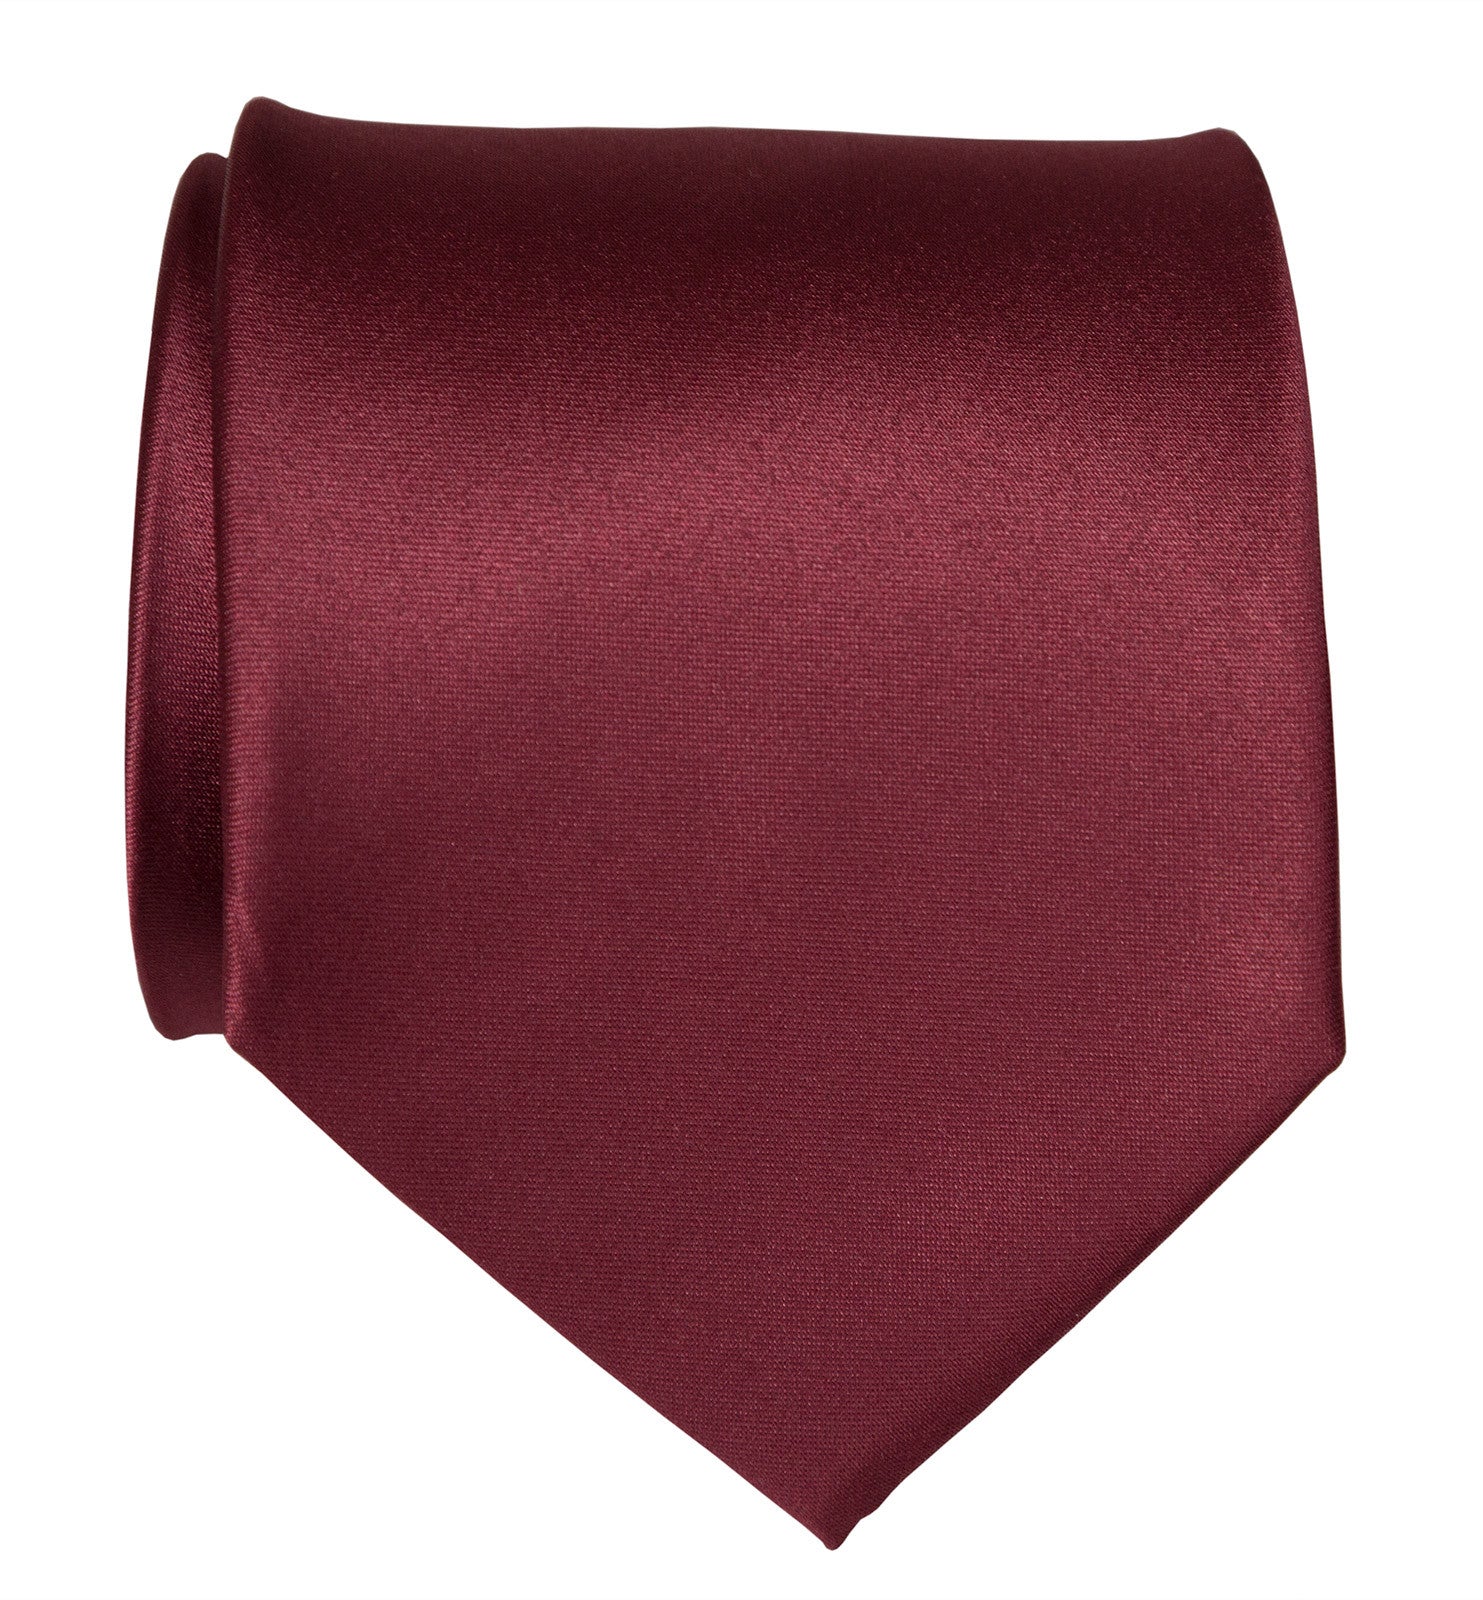 Burgundy Necktie. Solid Color Dark Red Satin Finish Tie, No Print Microfiber / Narrow